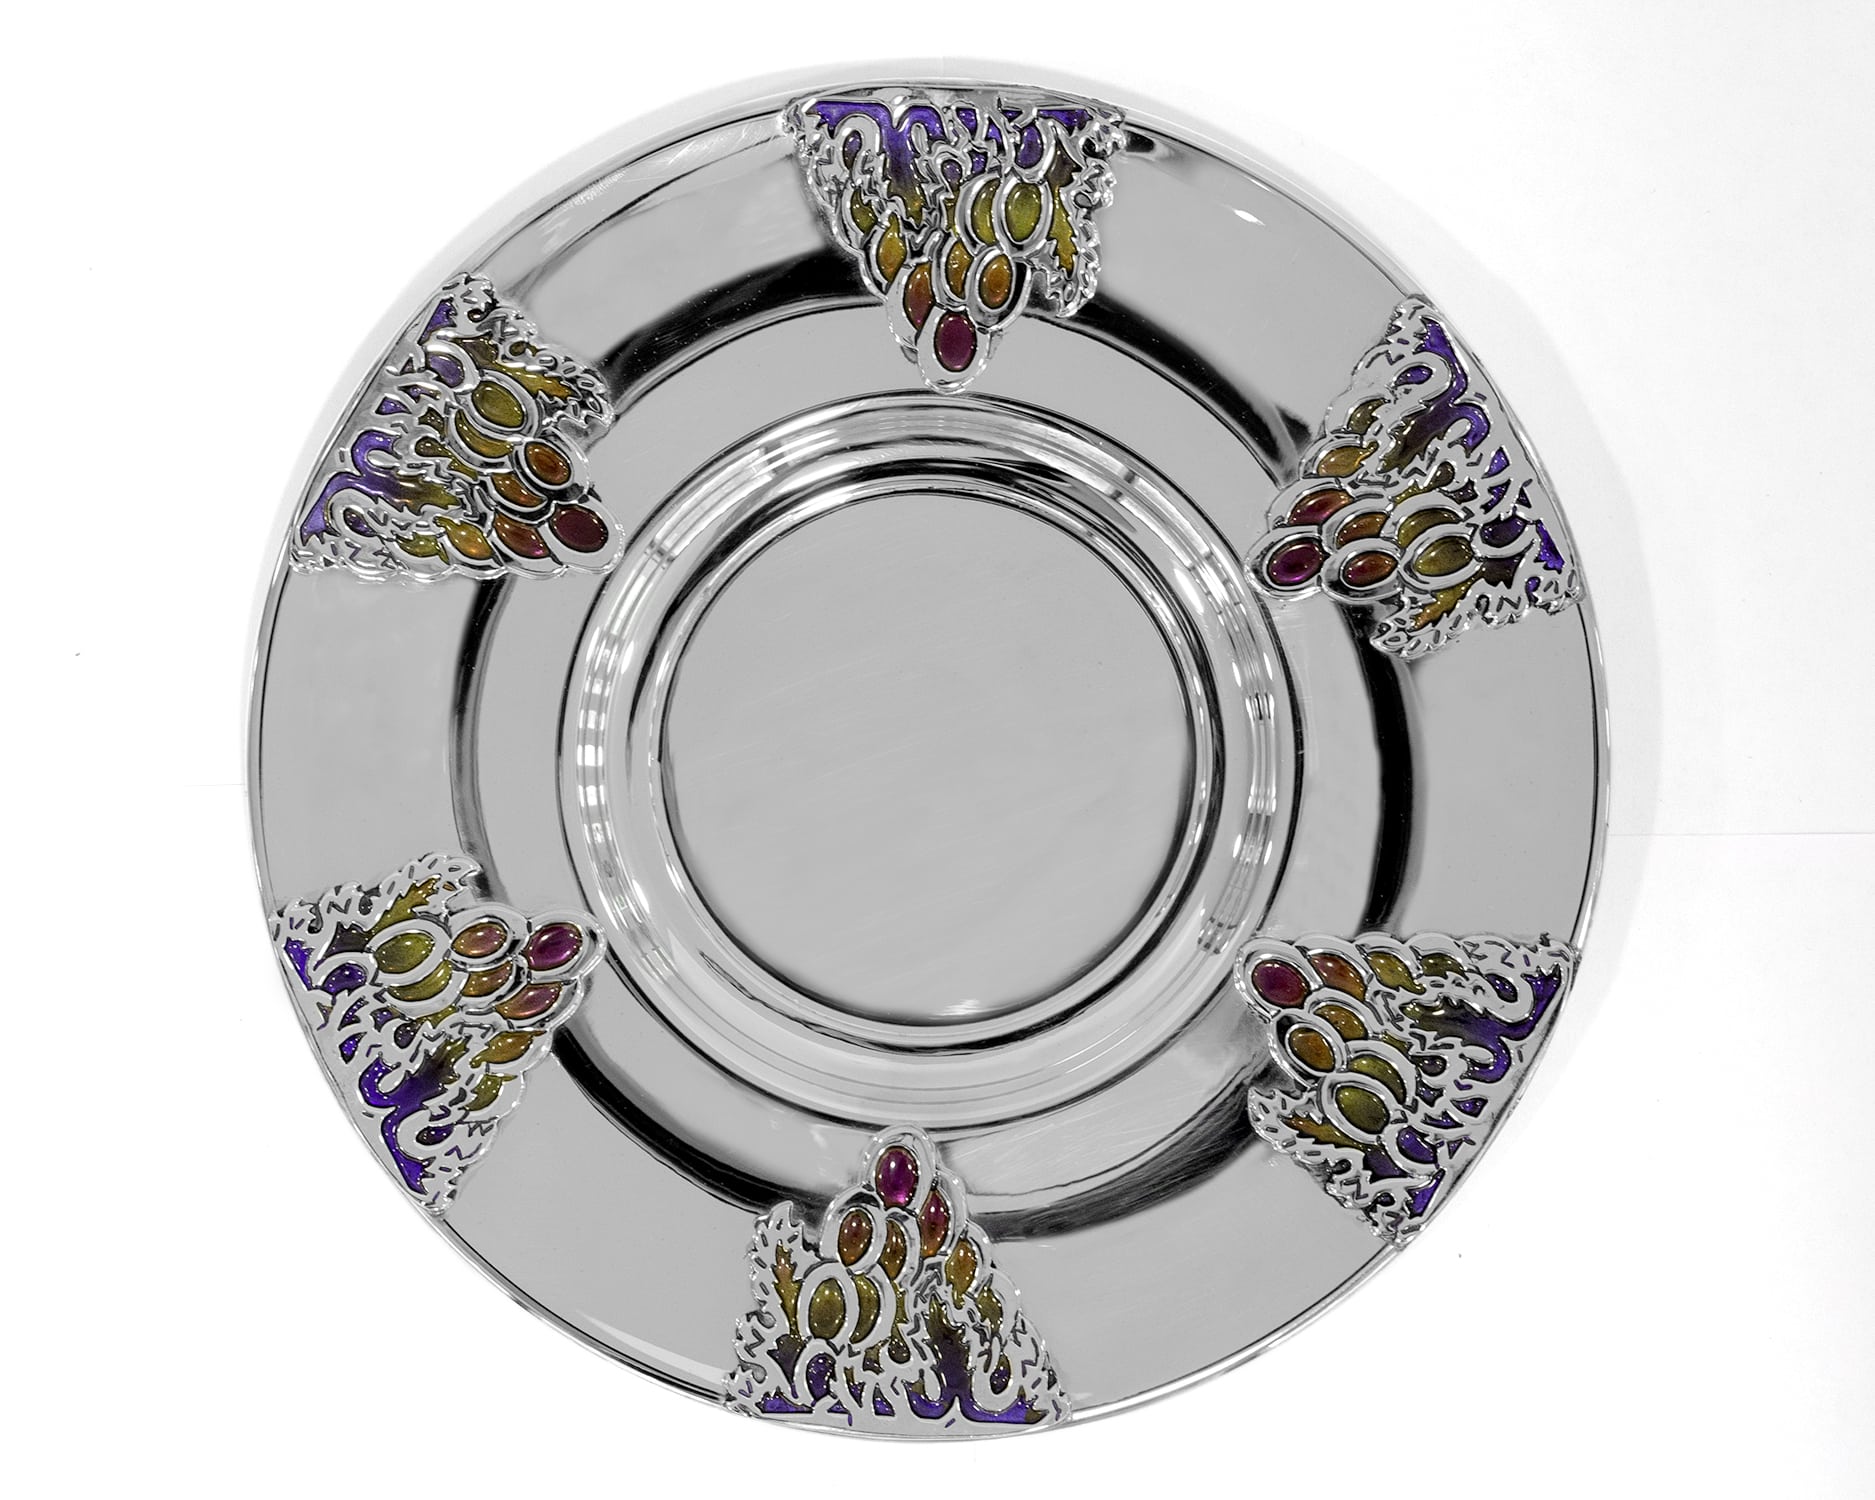 Grapes Design Silver Kiddush Cup Set